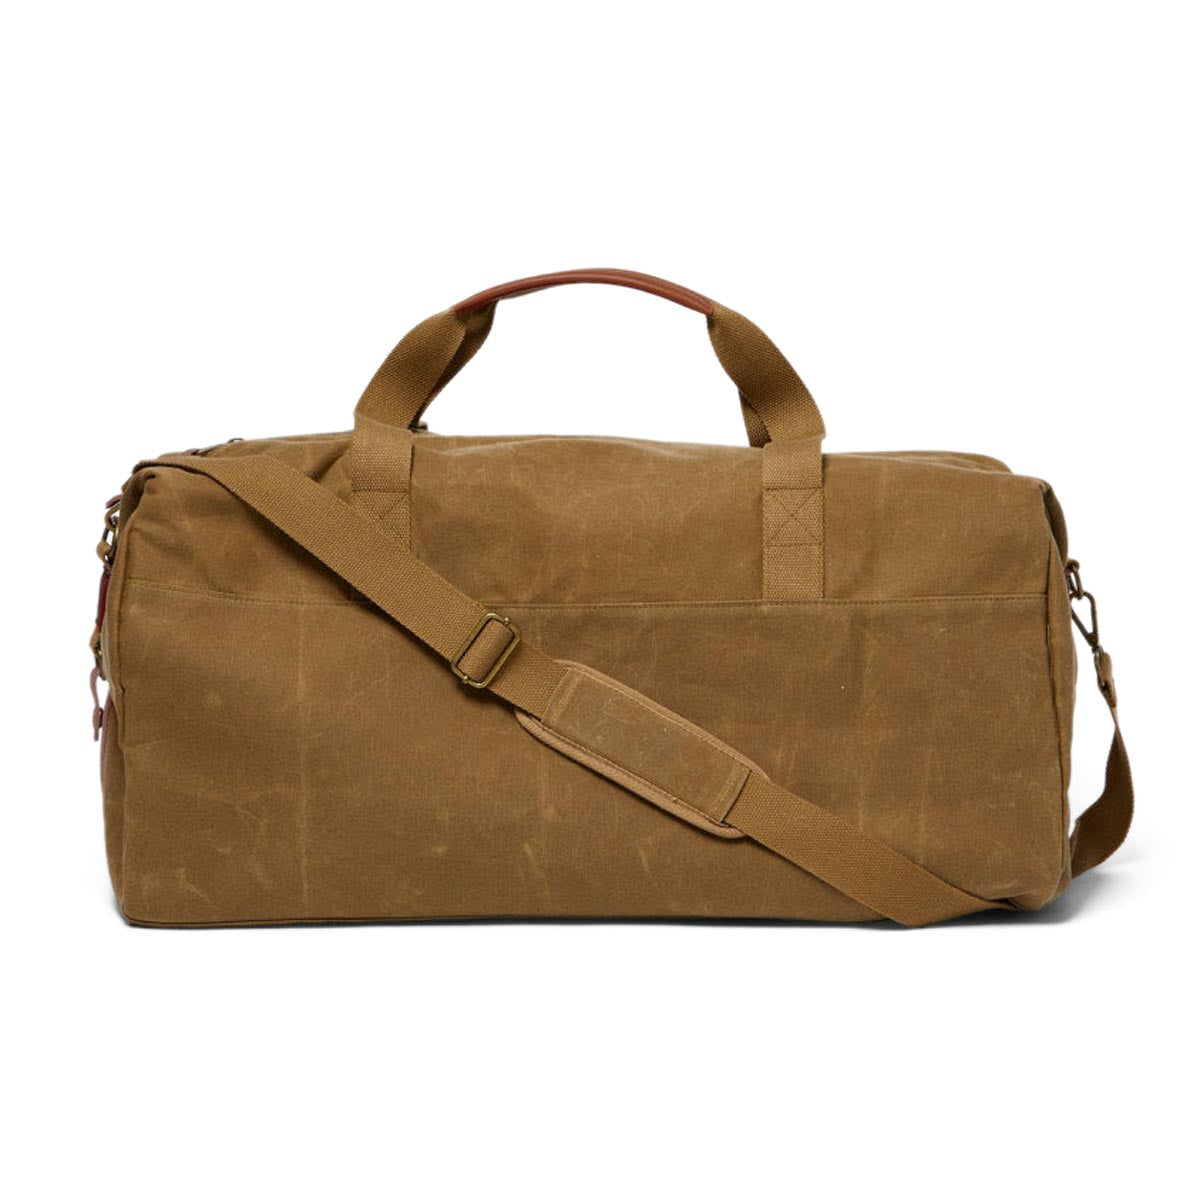 Brixton Traveler XL Weekender Duffle Bag - Olive Brown image 2